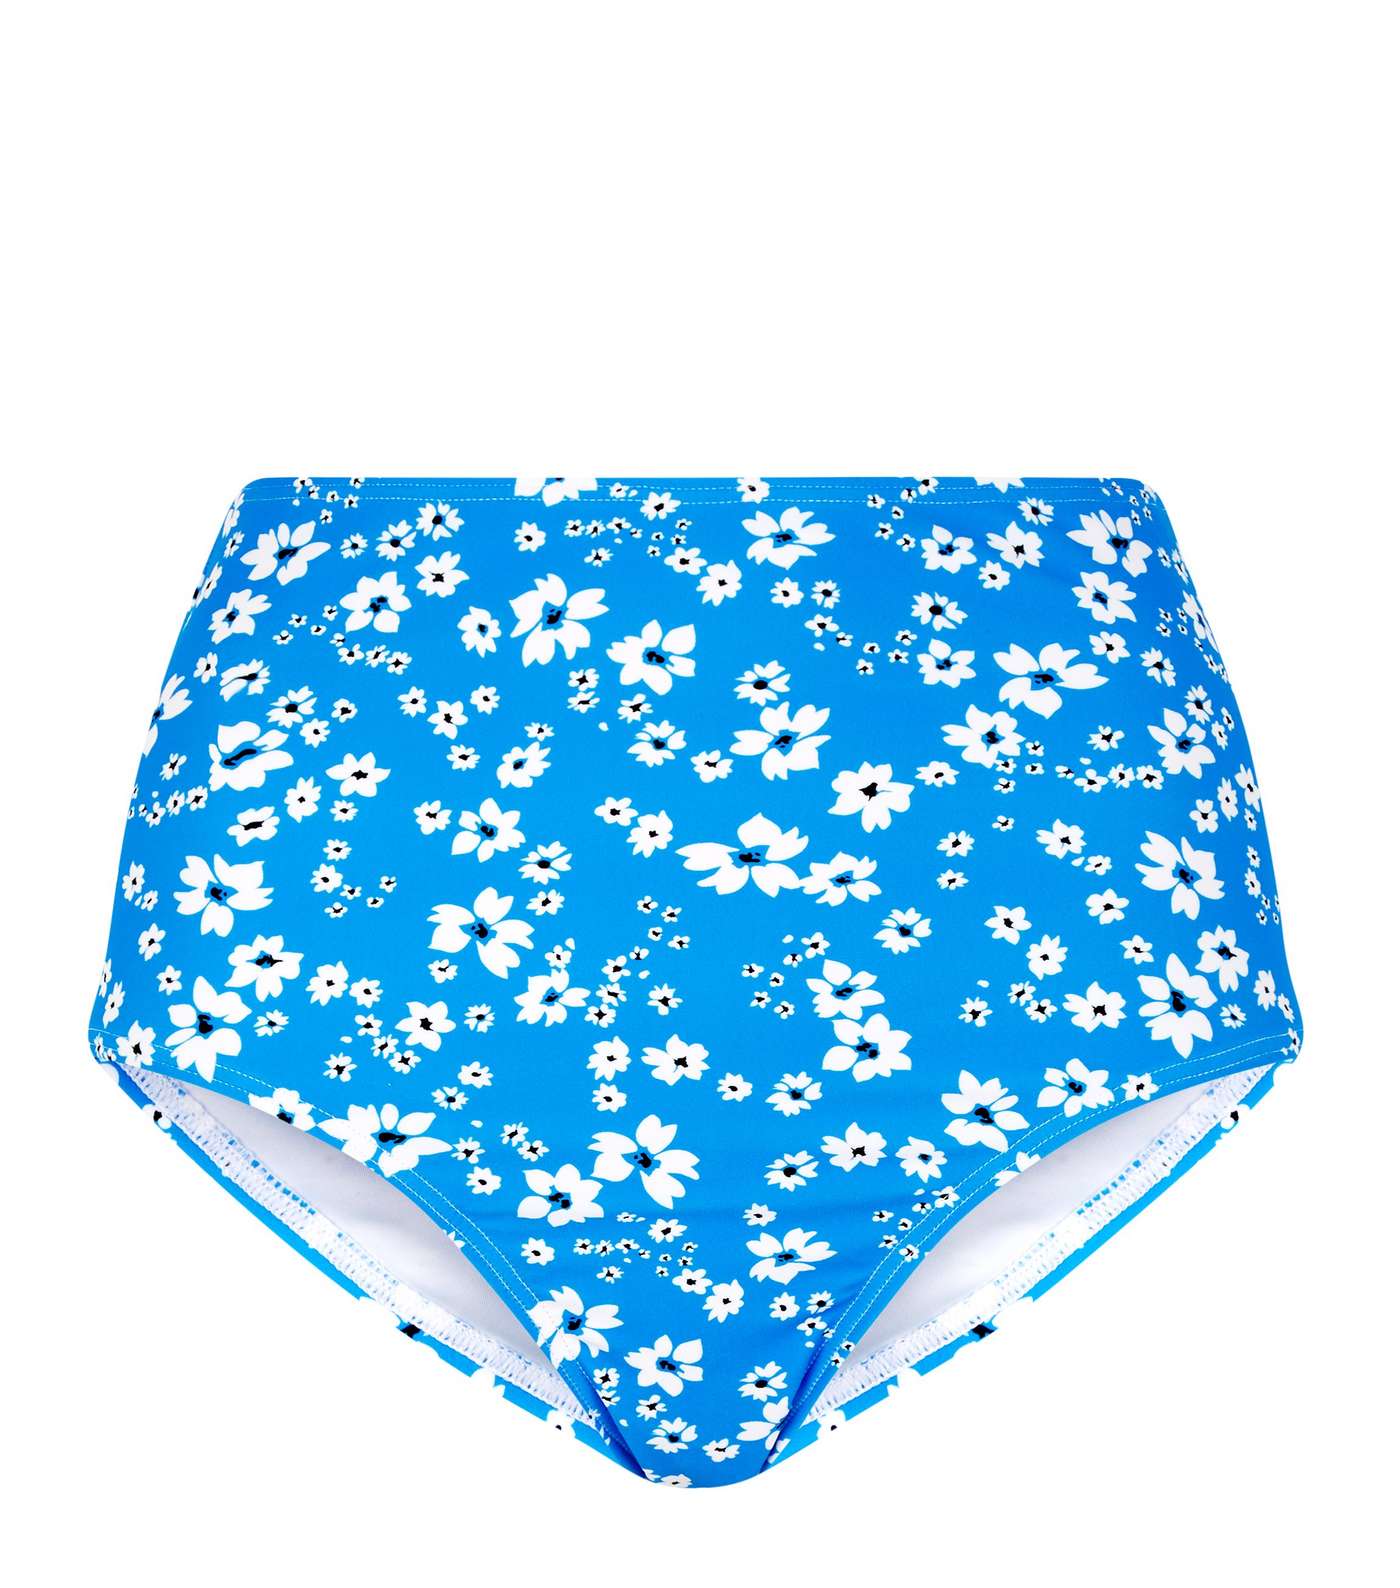 Blue Floral High Waist Bikini Bottoms Image 3